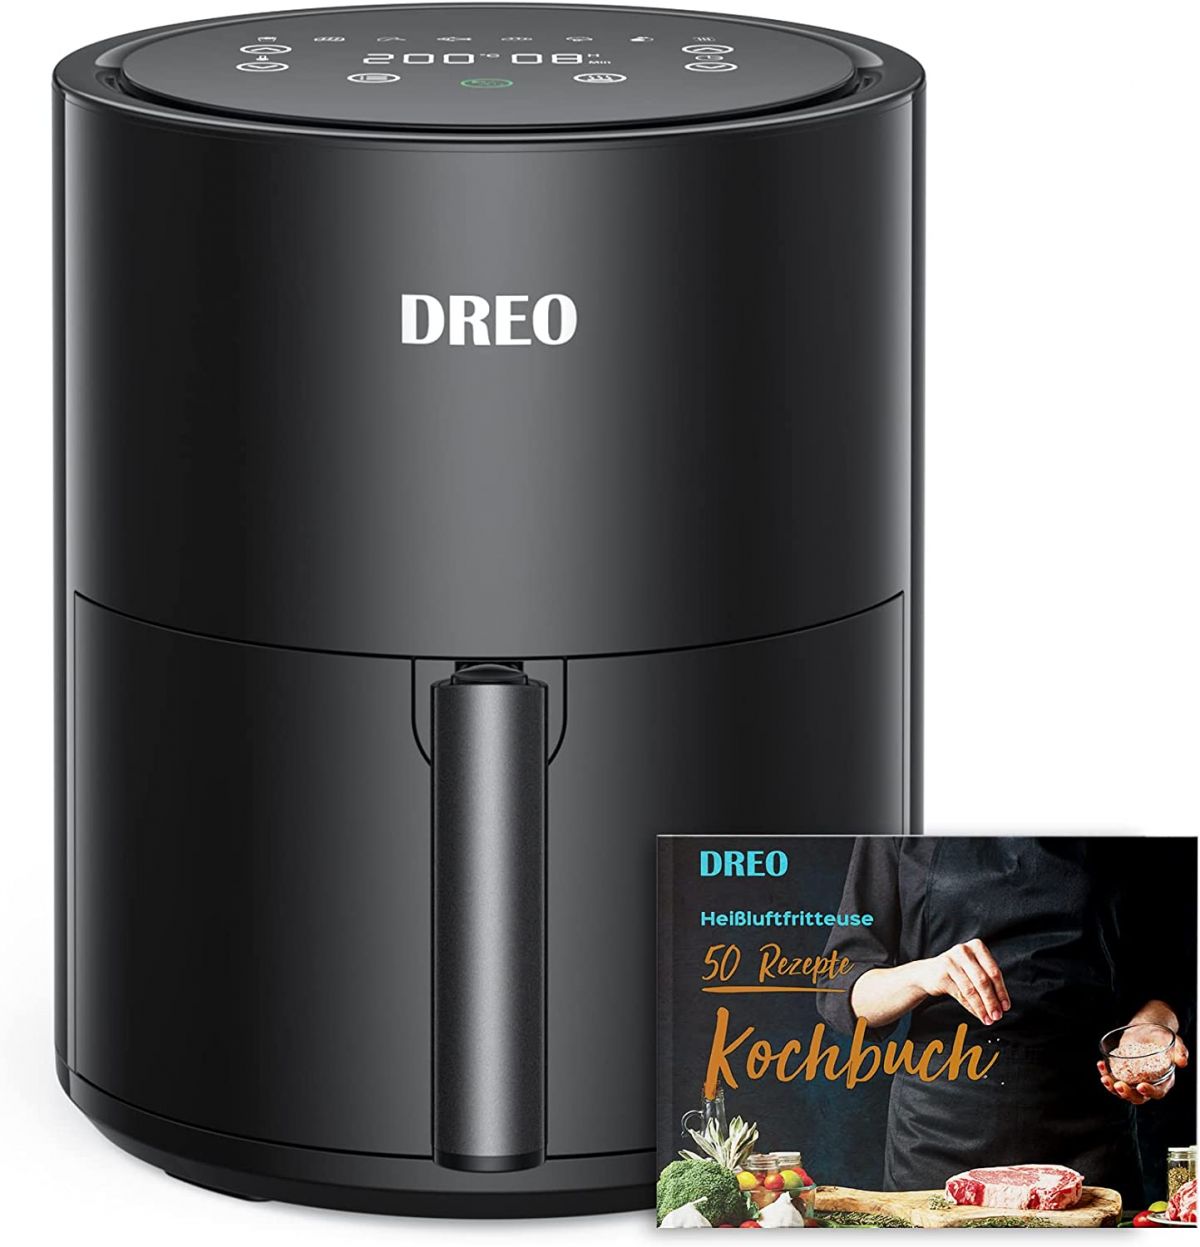 Dreo Hot Air Fryer 3.8L